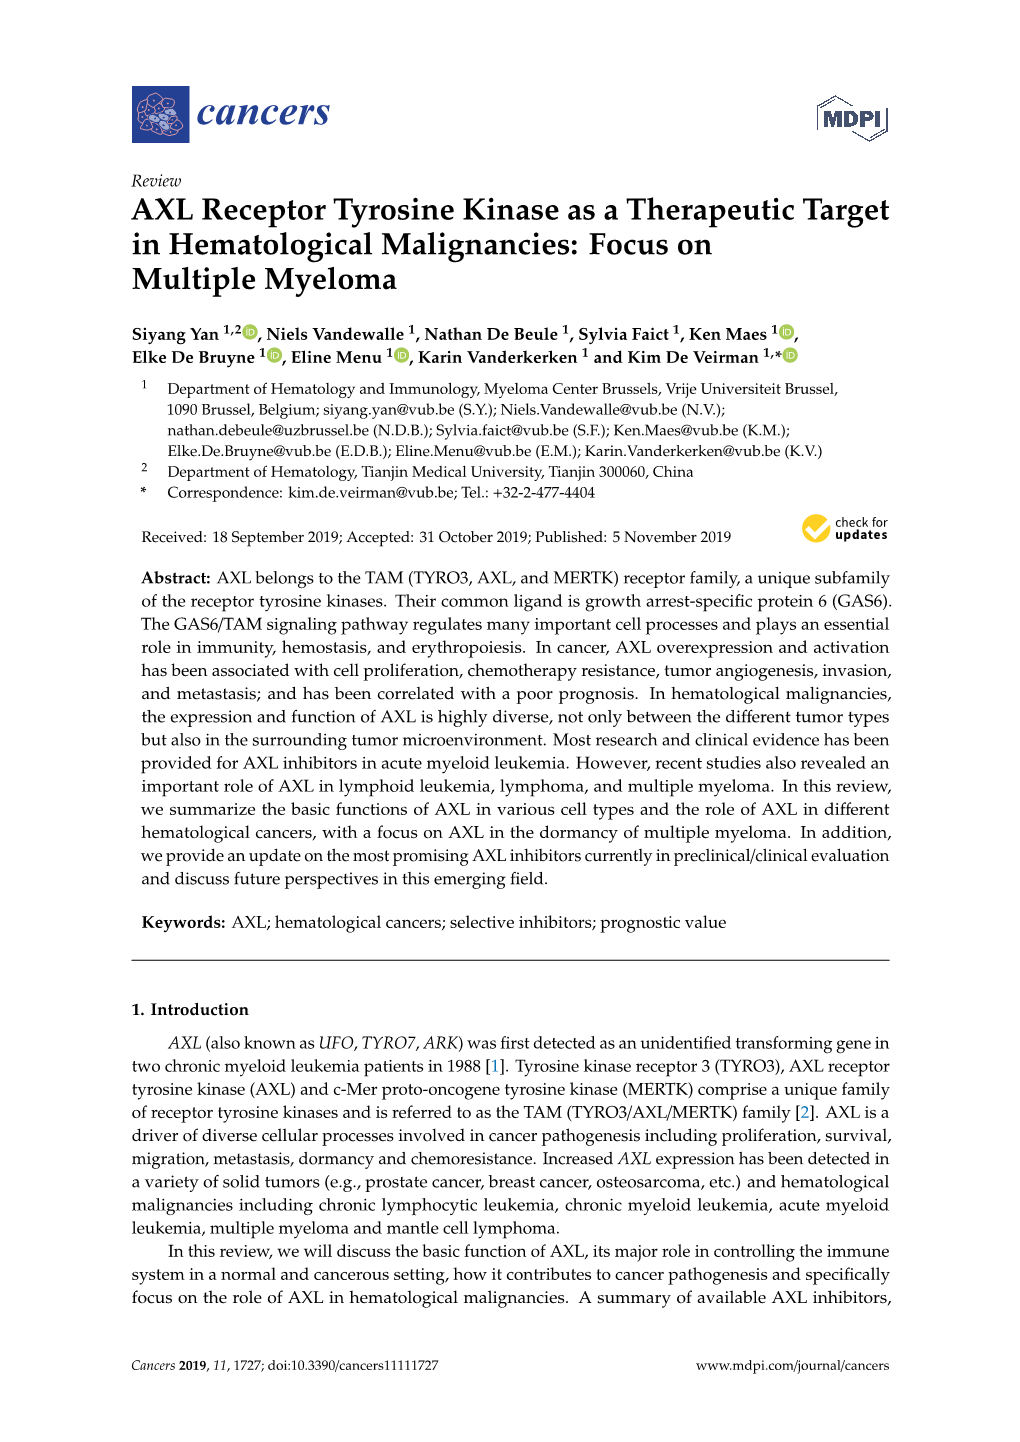 AXL Receptor Tyrosine Kinase As a Therapeutic Target in Hematological Malignancies: Focus on Multiple Myeloma